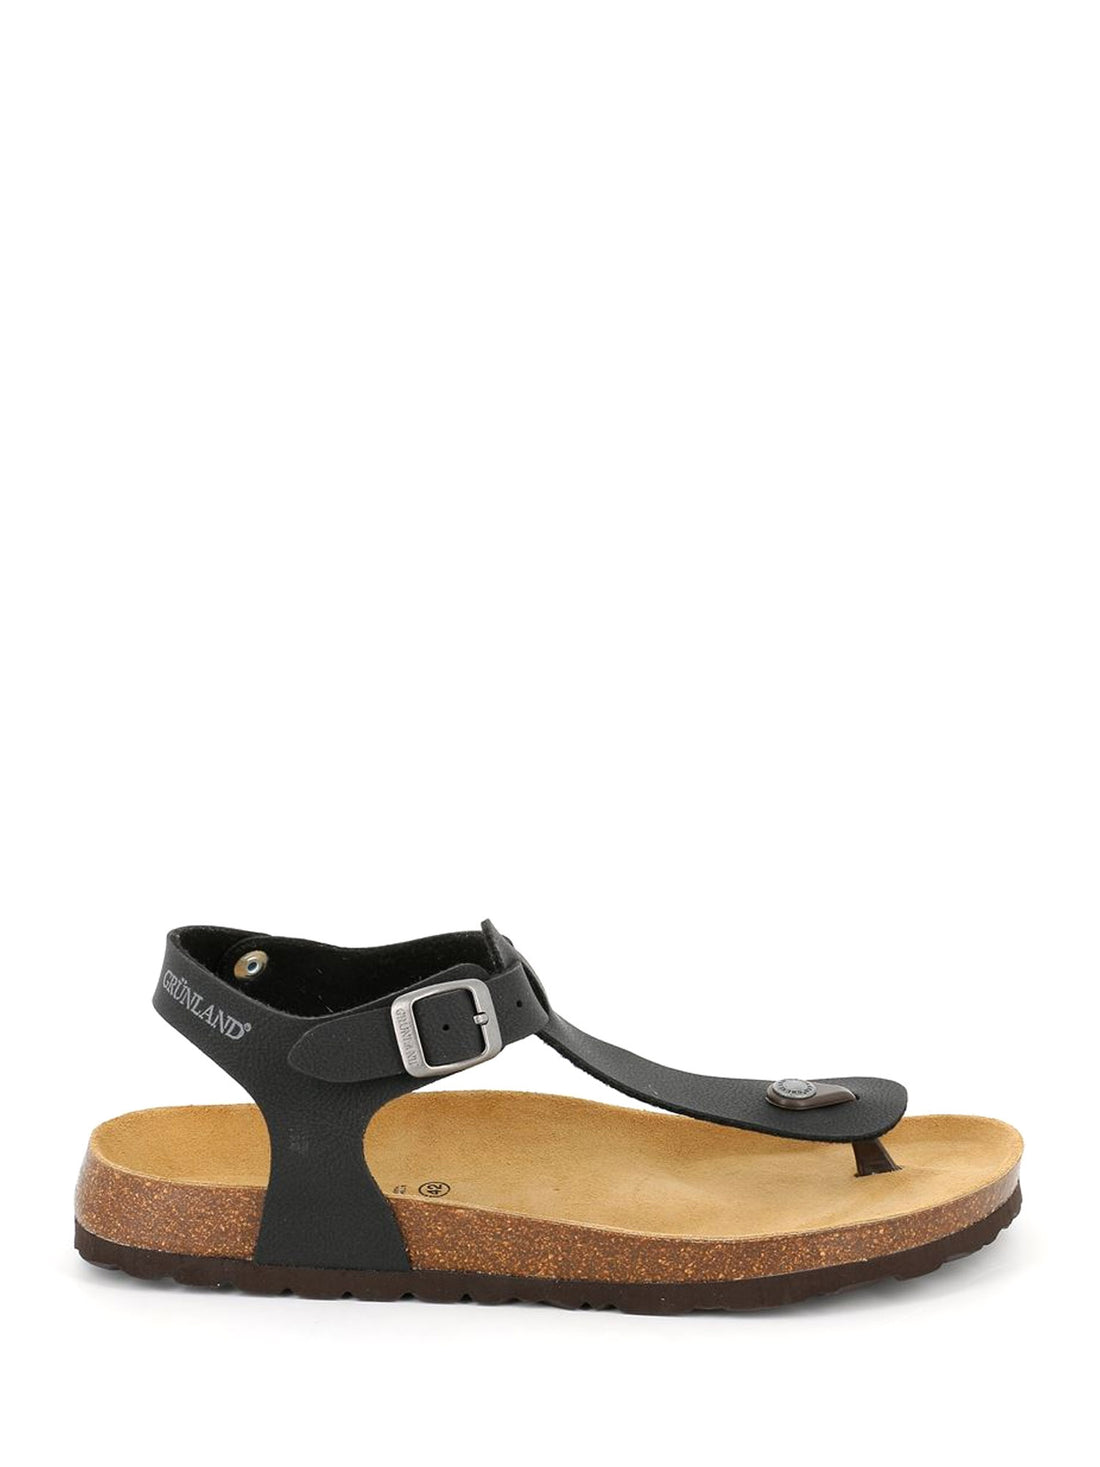 Grunland Sandals SB1573